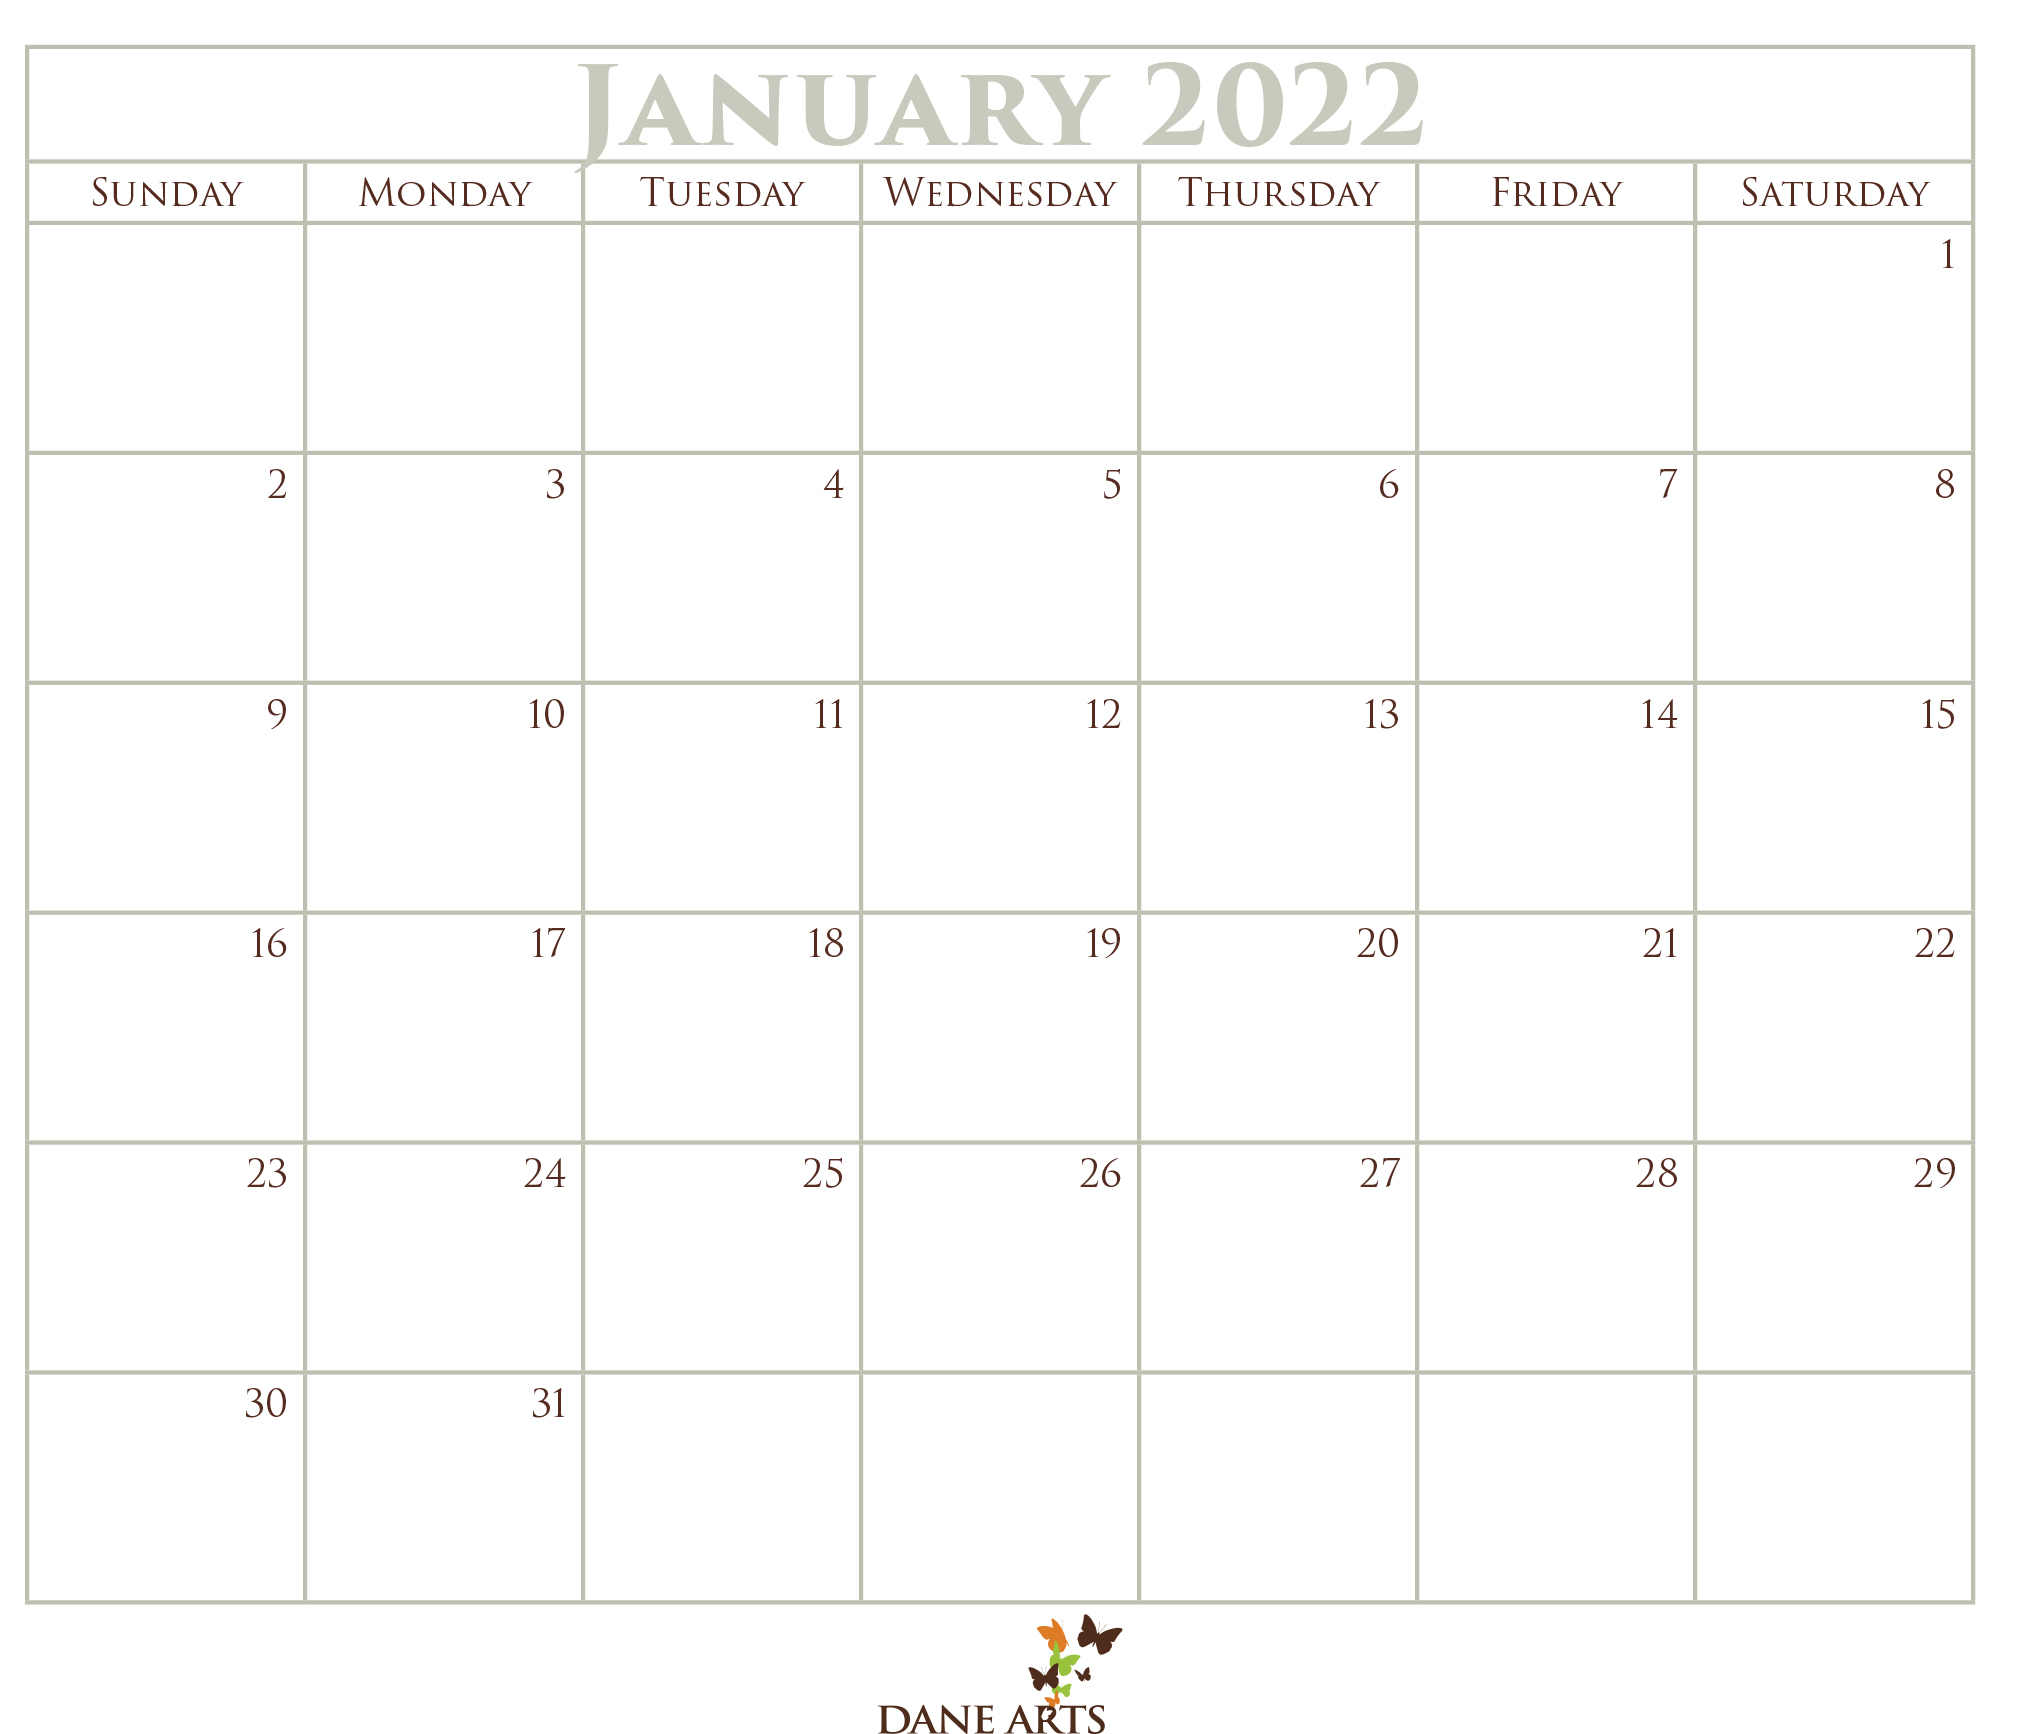 January Calendar Dates